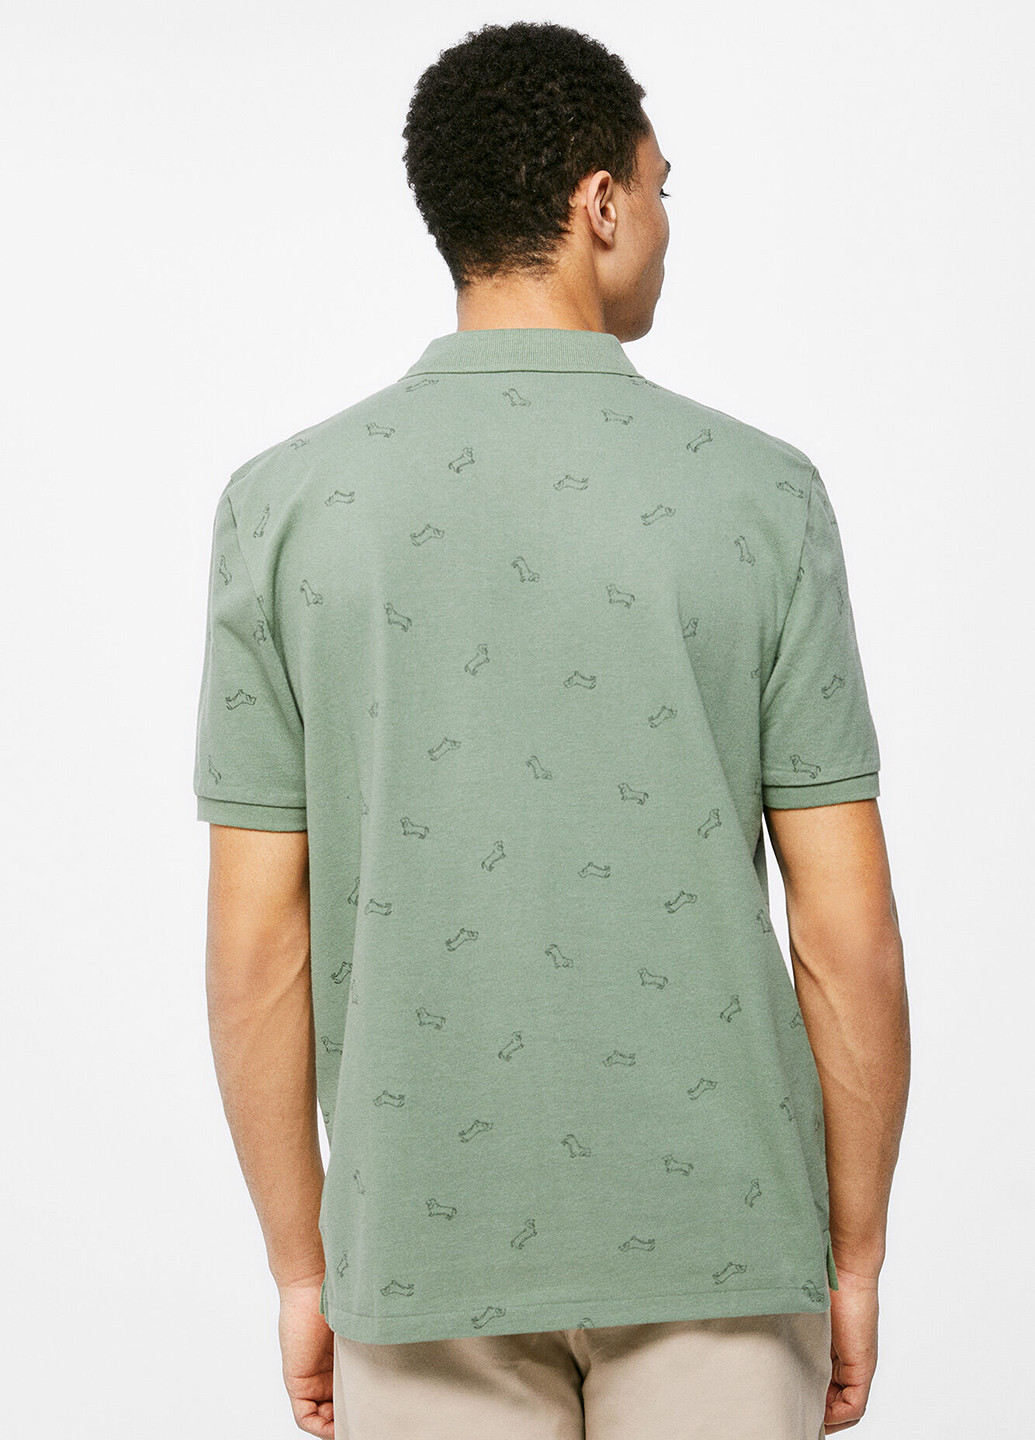 Оливковая футболка-поло для мужчин Springfield с рисунком